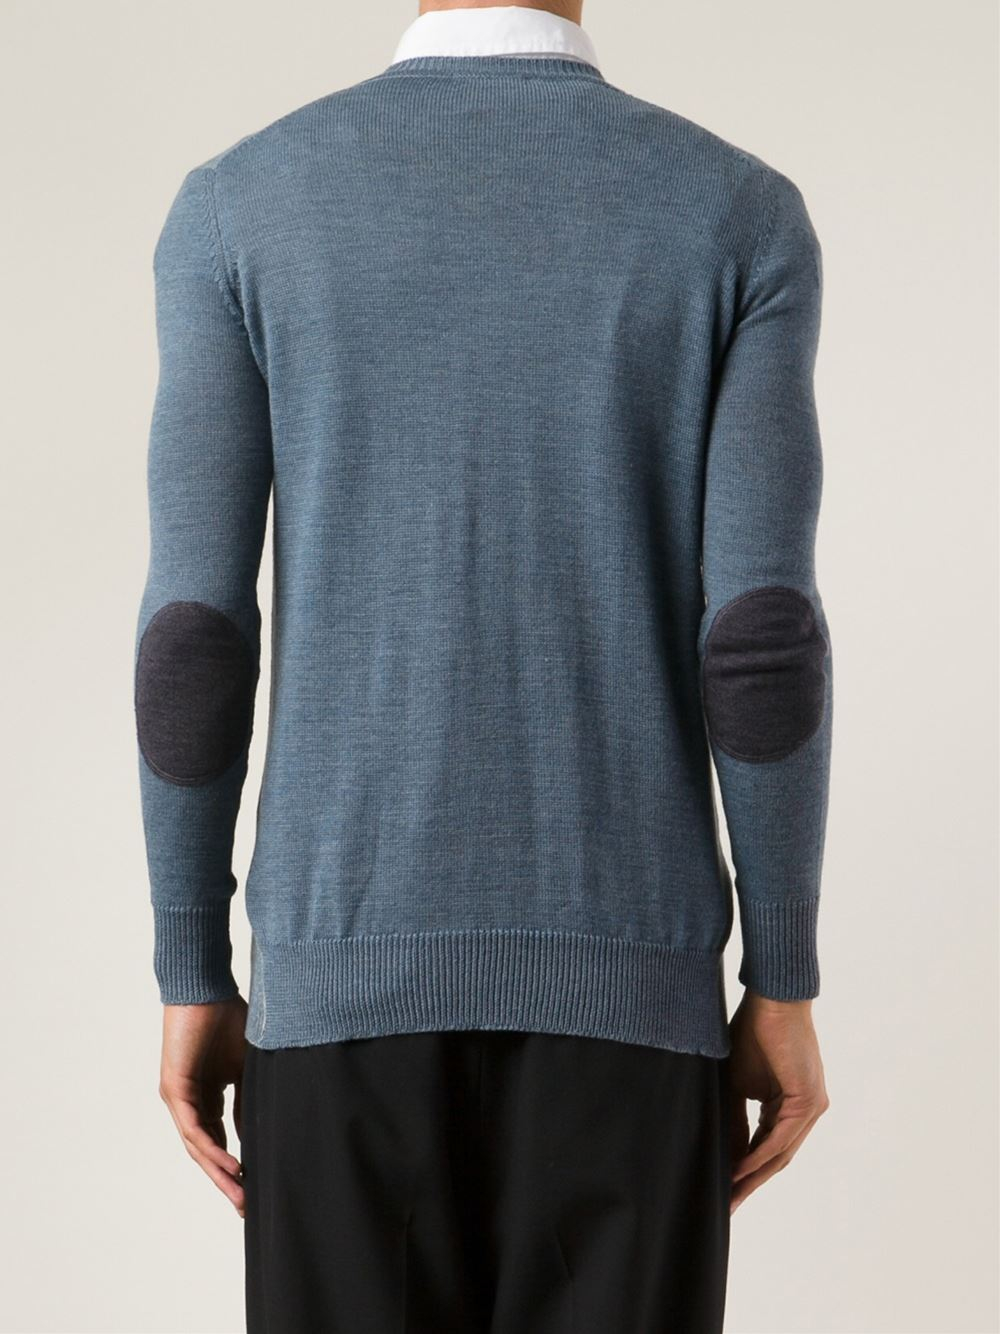 Lyst - Vivienne Westwood Kitten Pullover Sweater in Blue for Men